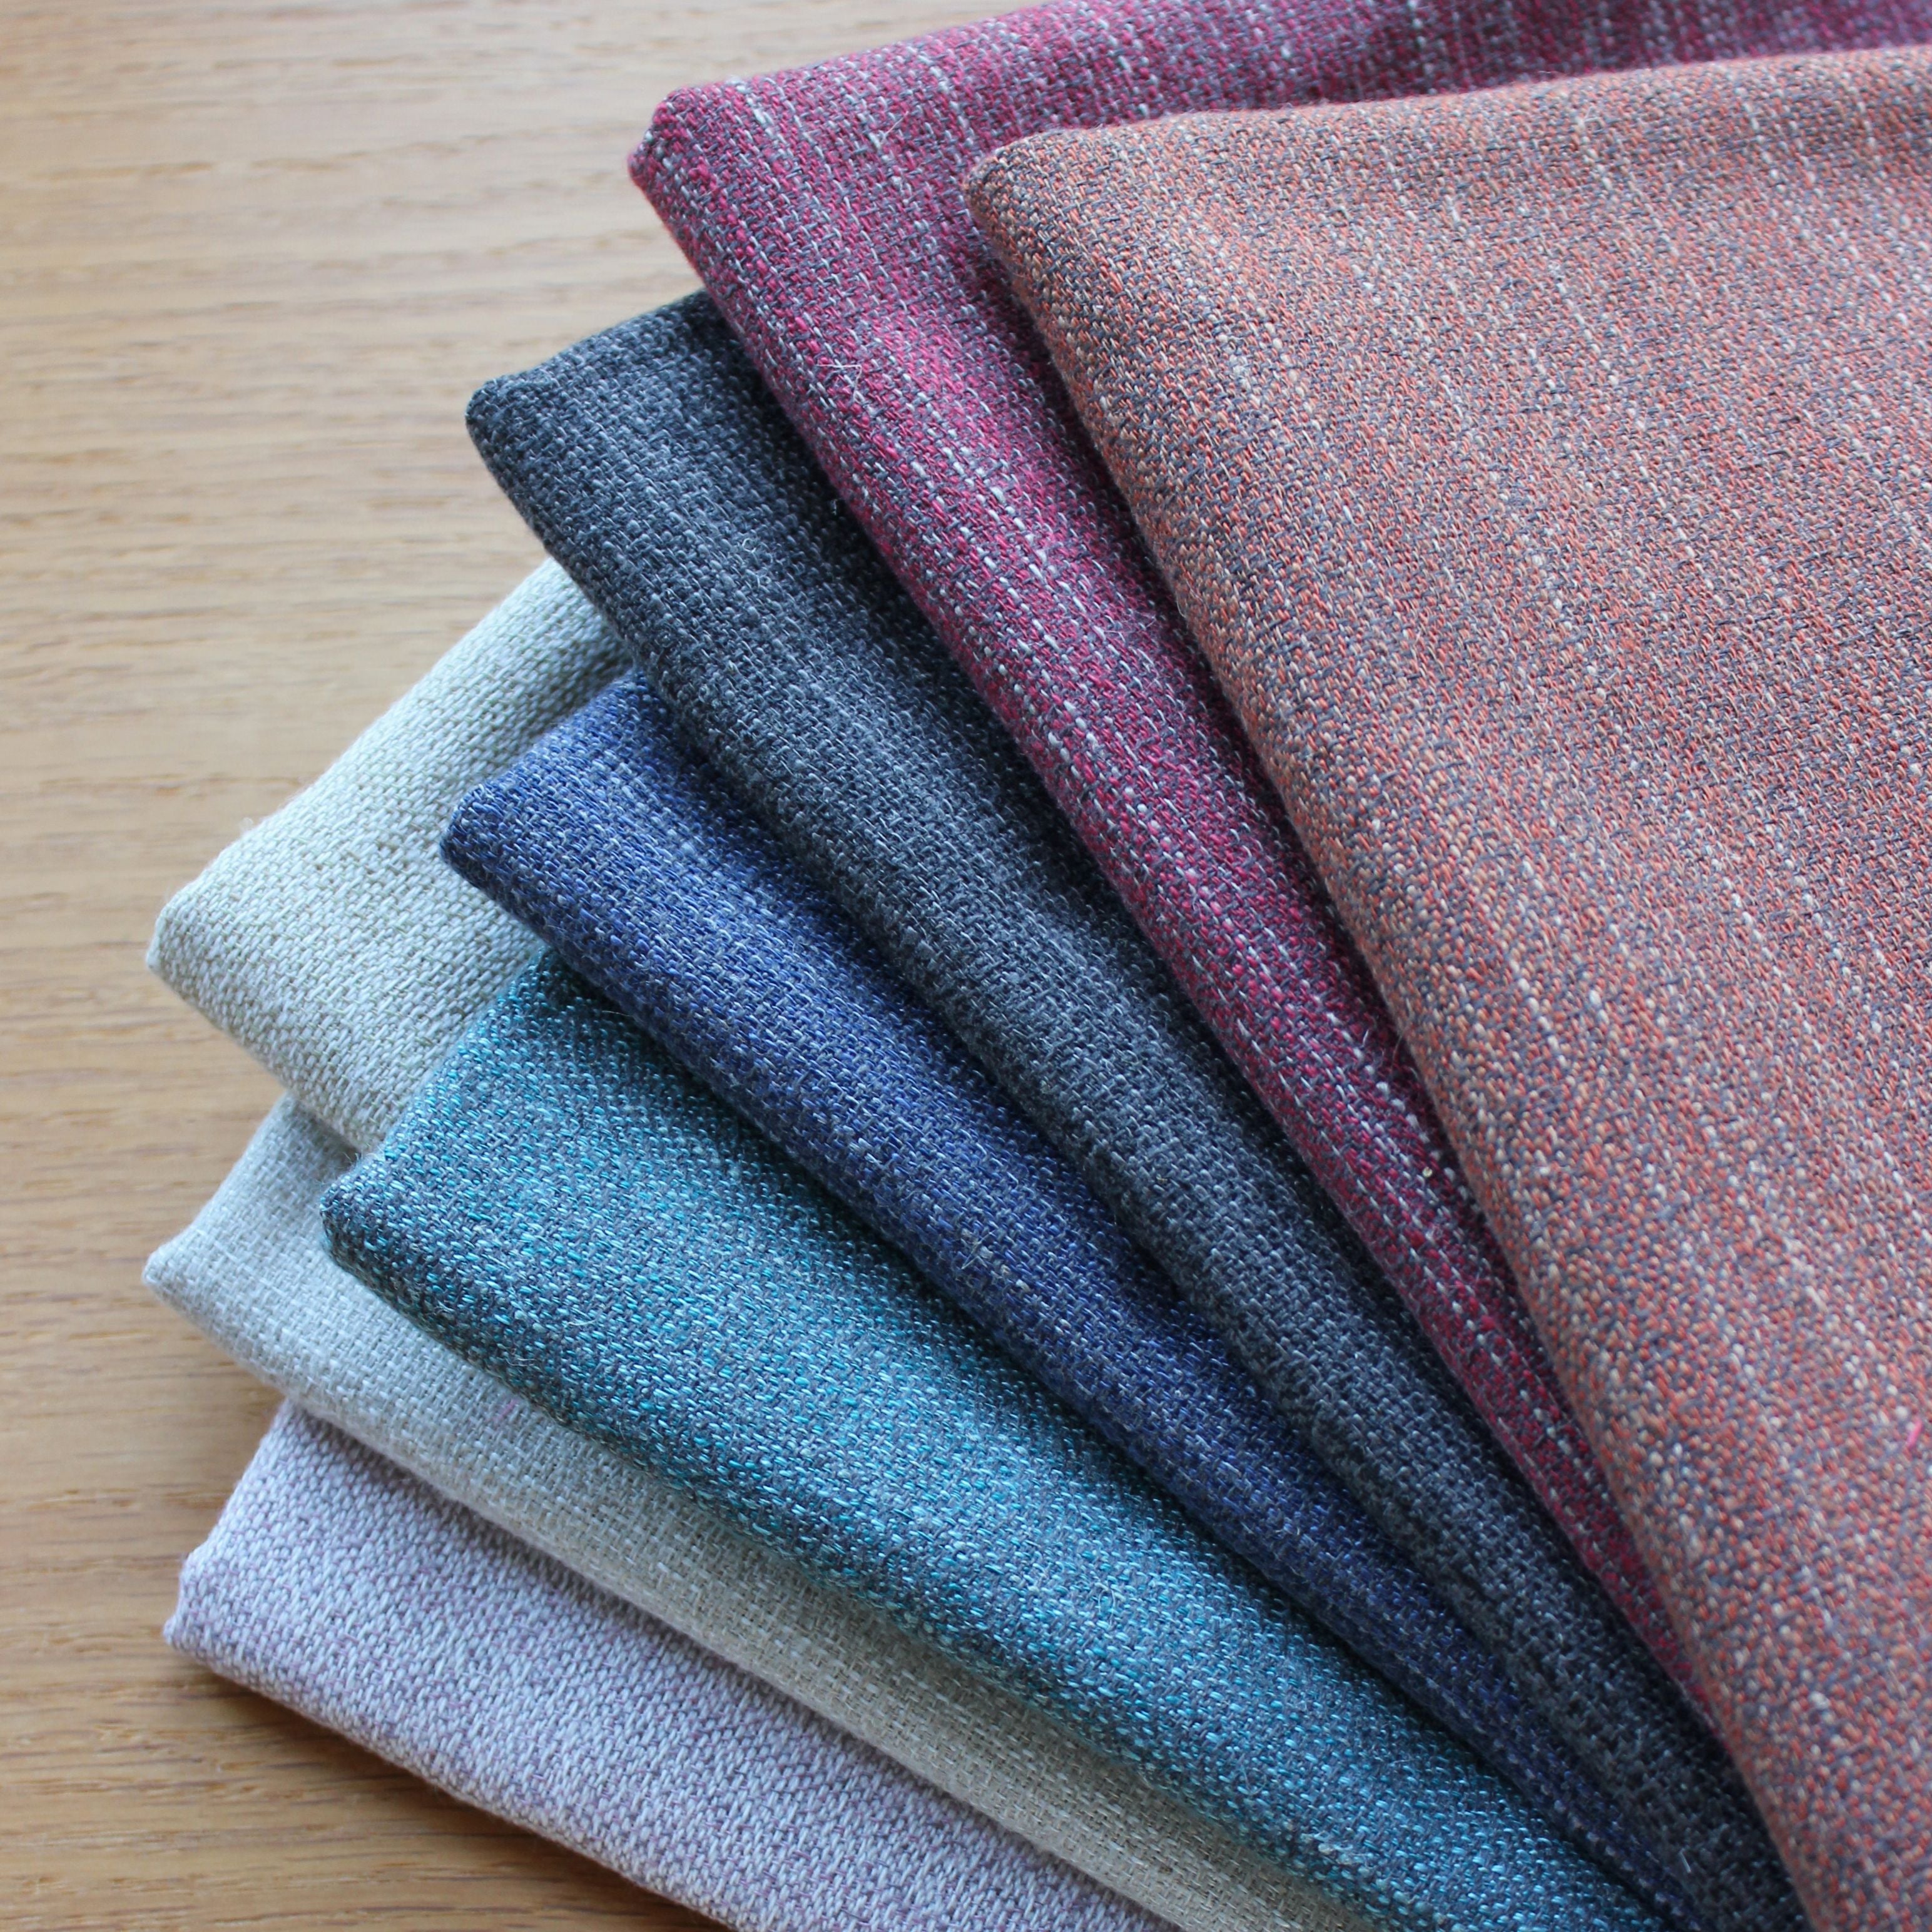 McAlister Textiles Hamleton Rustic Linen Blend Charcoal Grey Plain Fabric Fabrics 